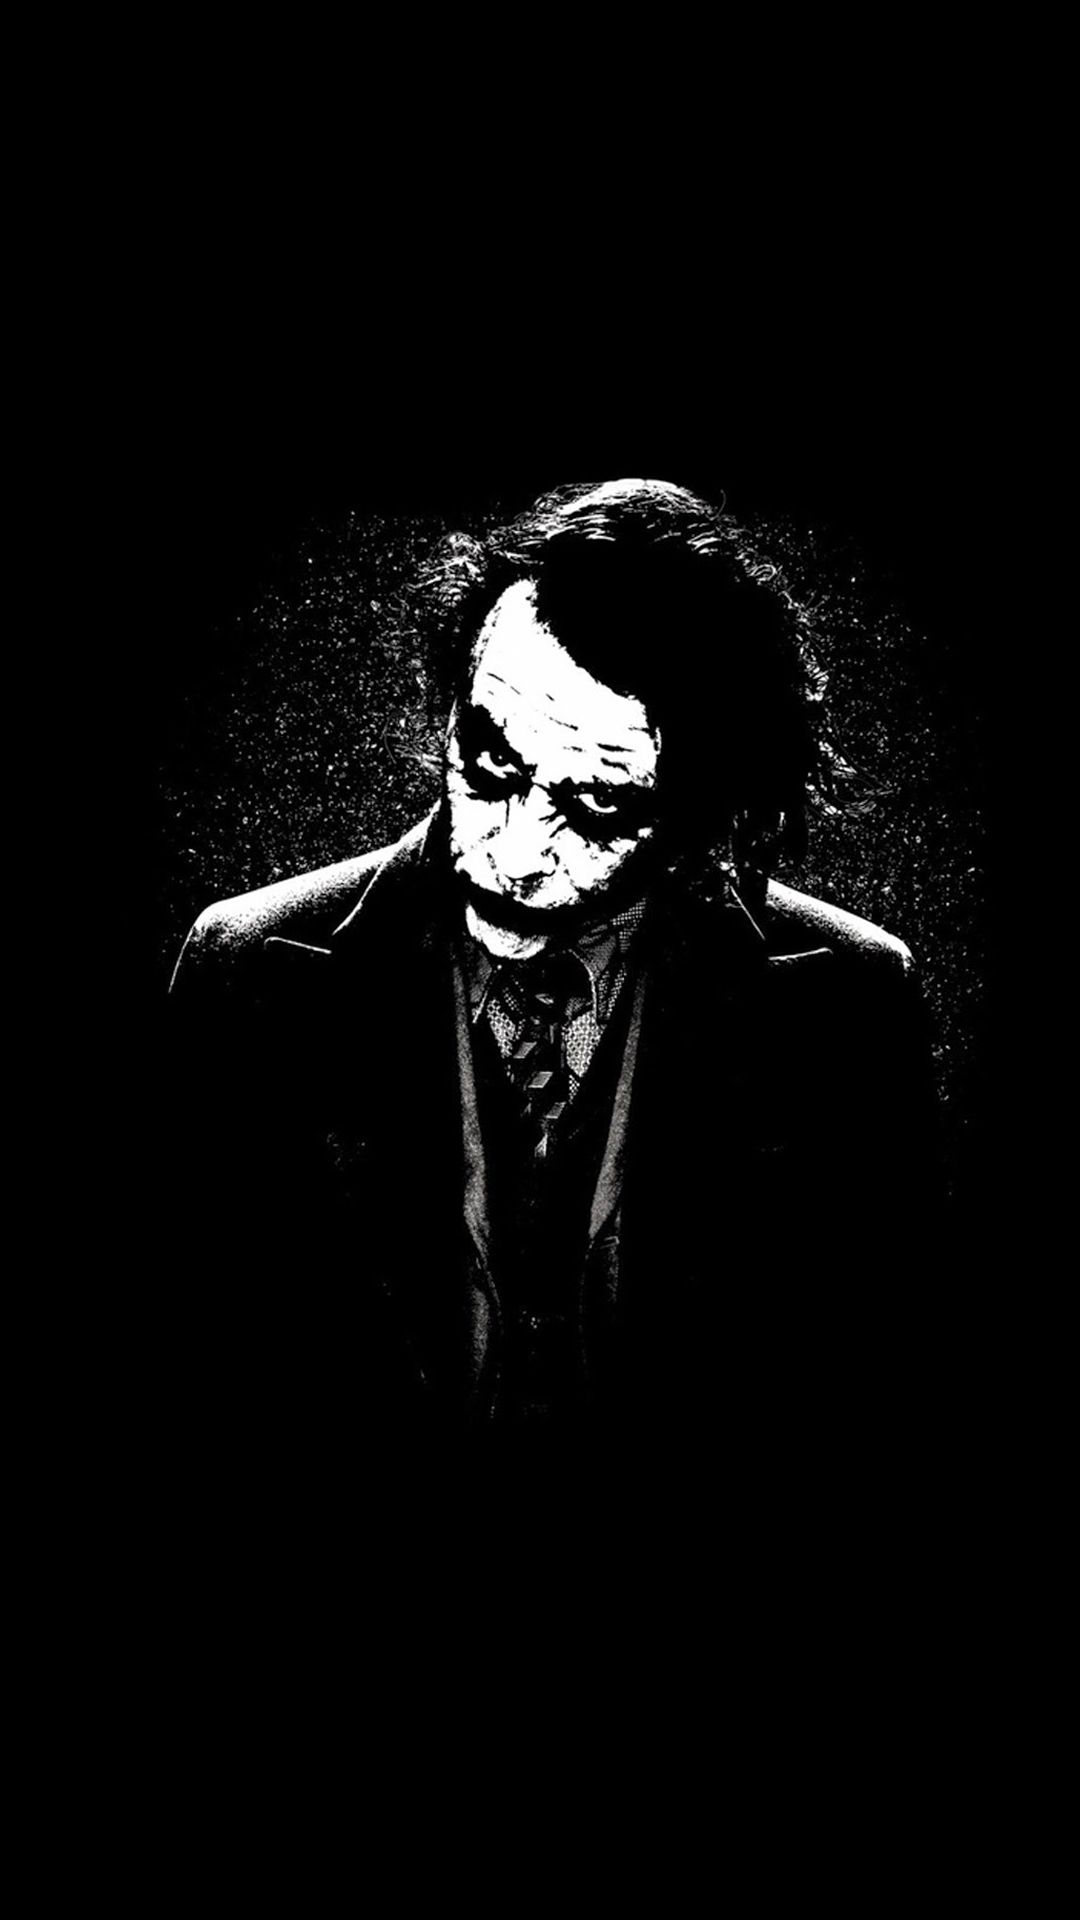 The Joker Batman Black White iPhone 6 Wallpaper Download | iPhone ...